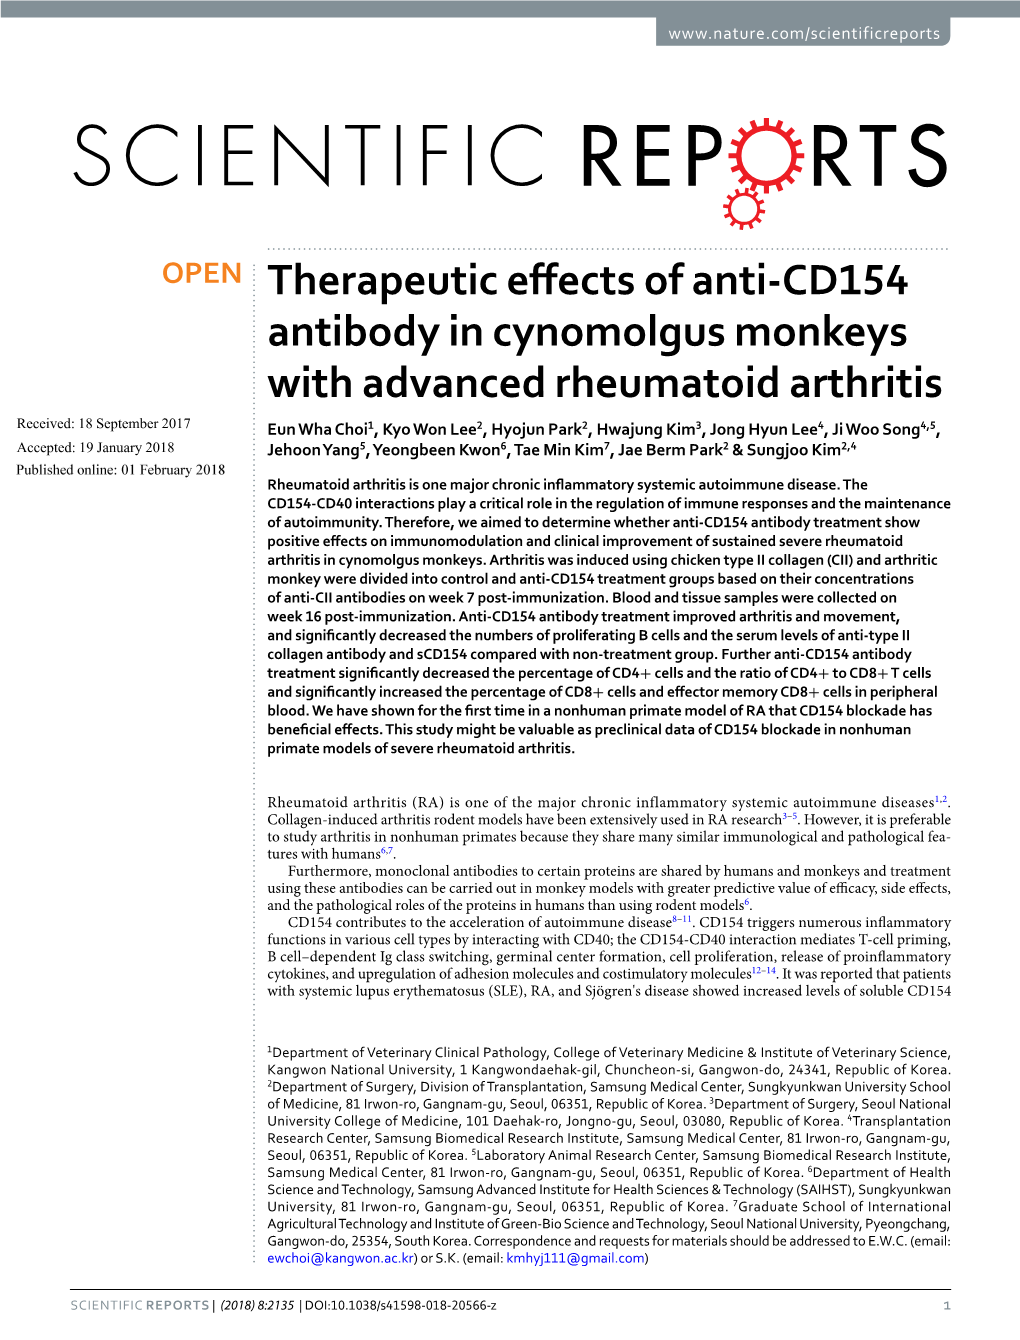 Therapeutic Effects of Anti-CD154 Antibody in Cynomolgus Monkeys